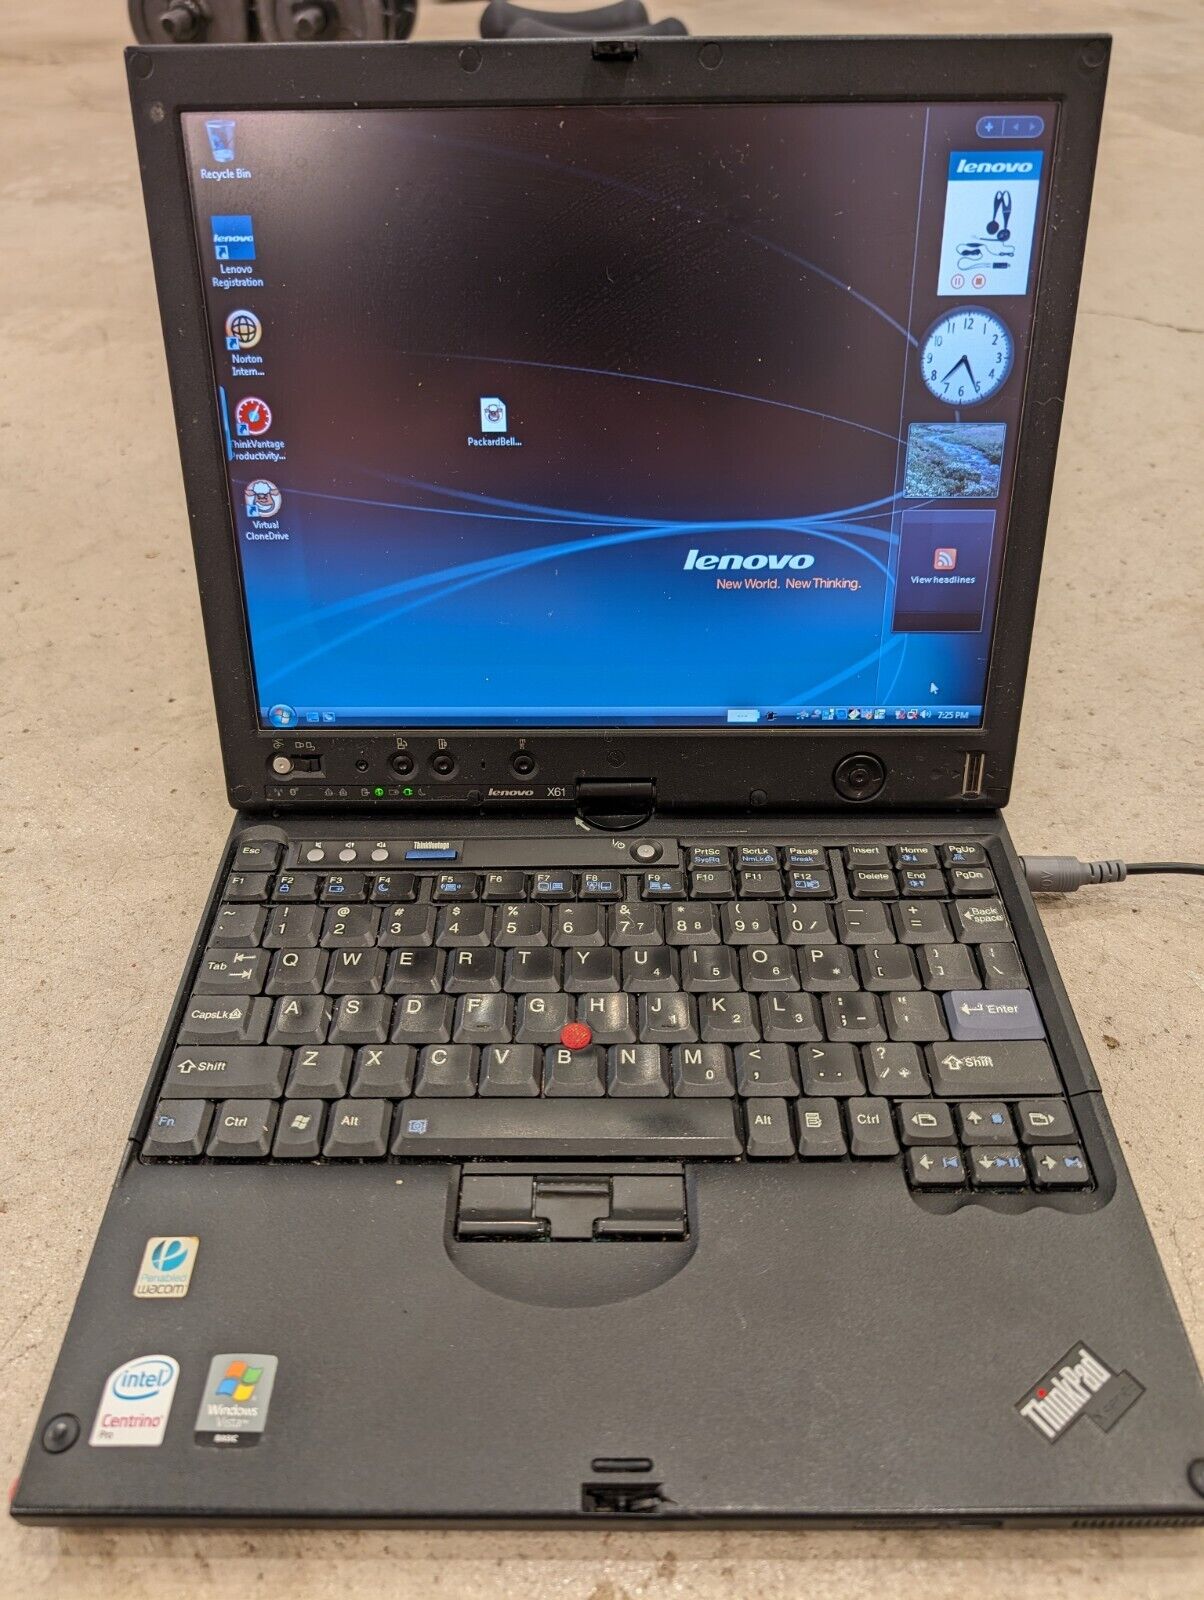 IBM Lenovo Thinkpad X61 Laptop Tablet PC 12.1” 3GB RAM 160GB HDD Windows Vista